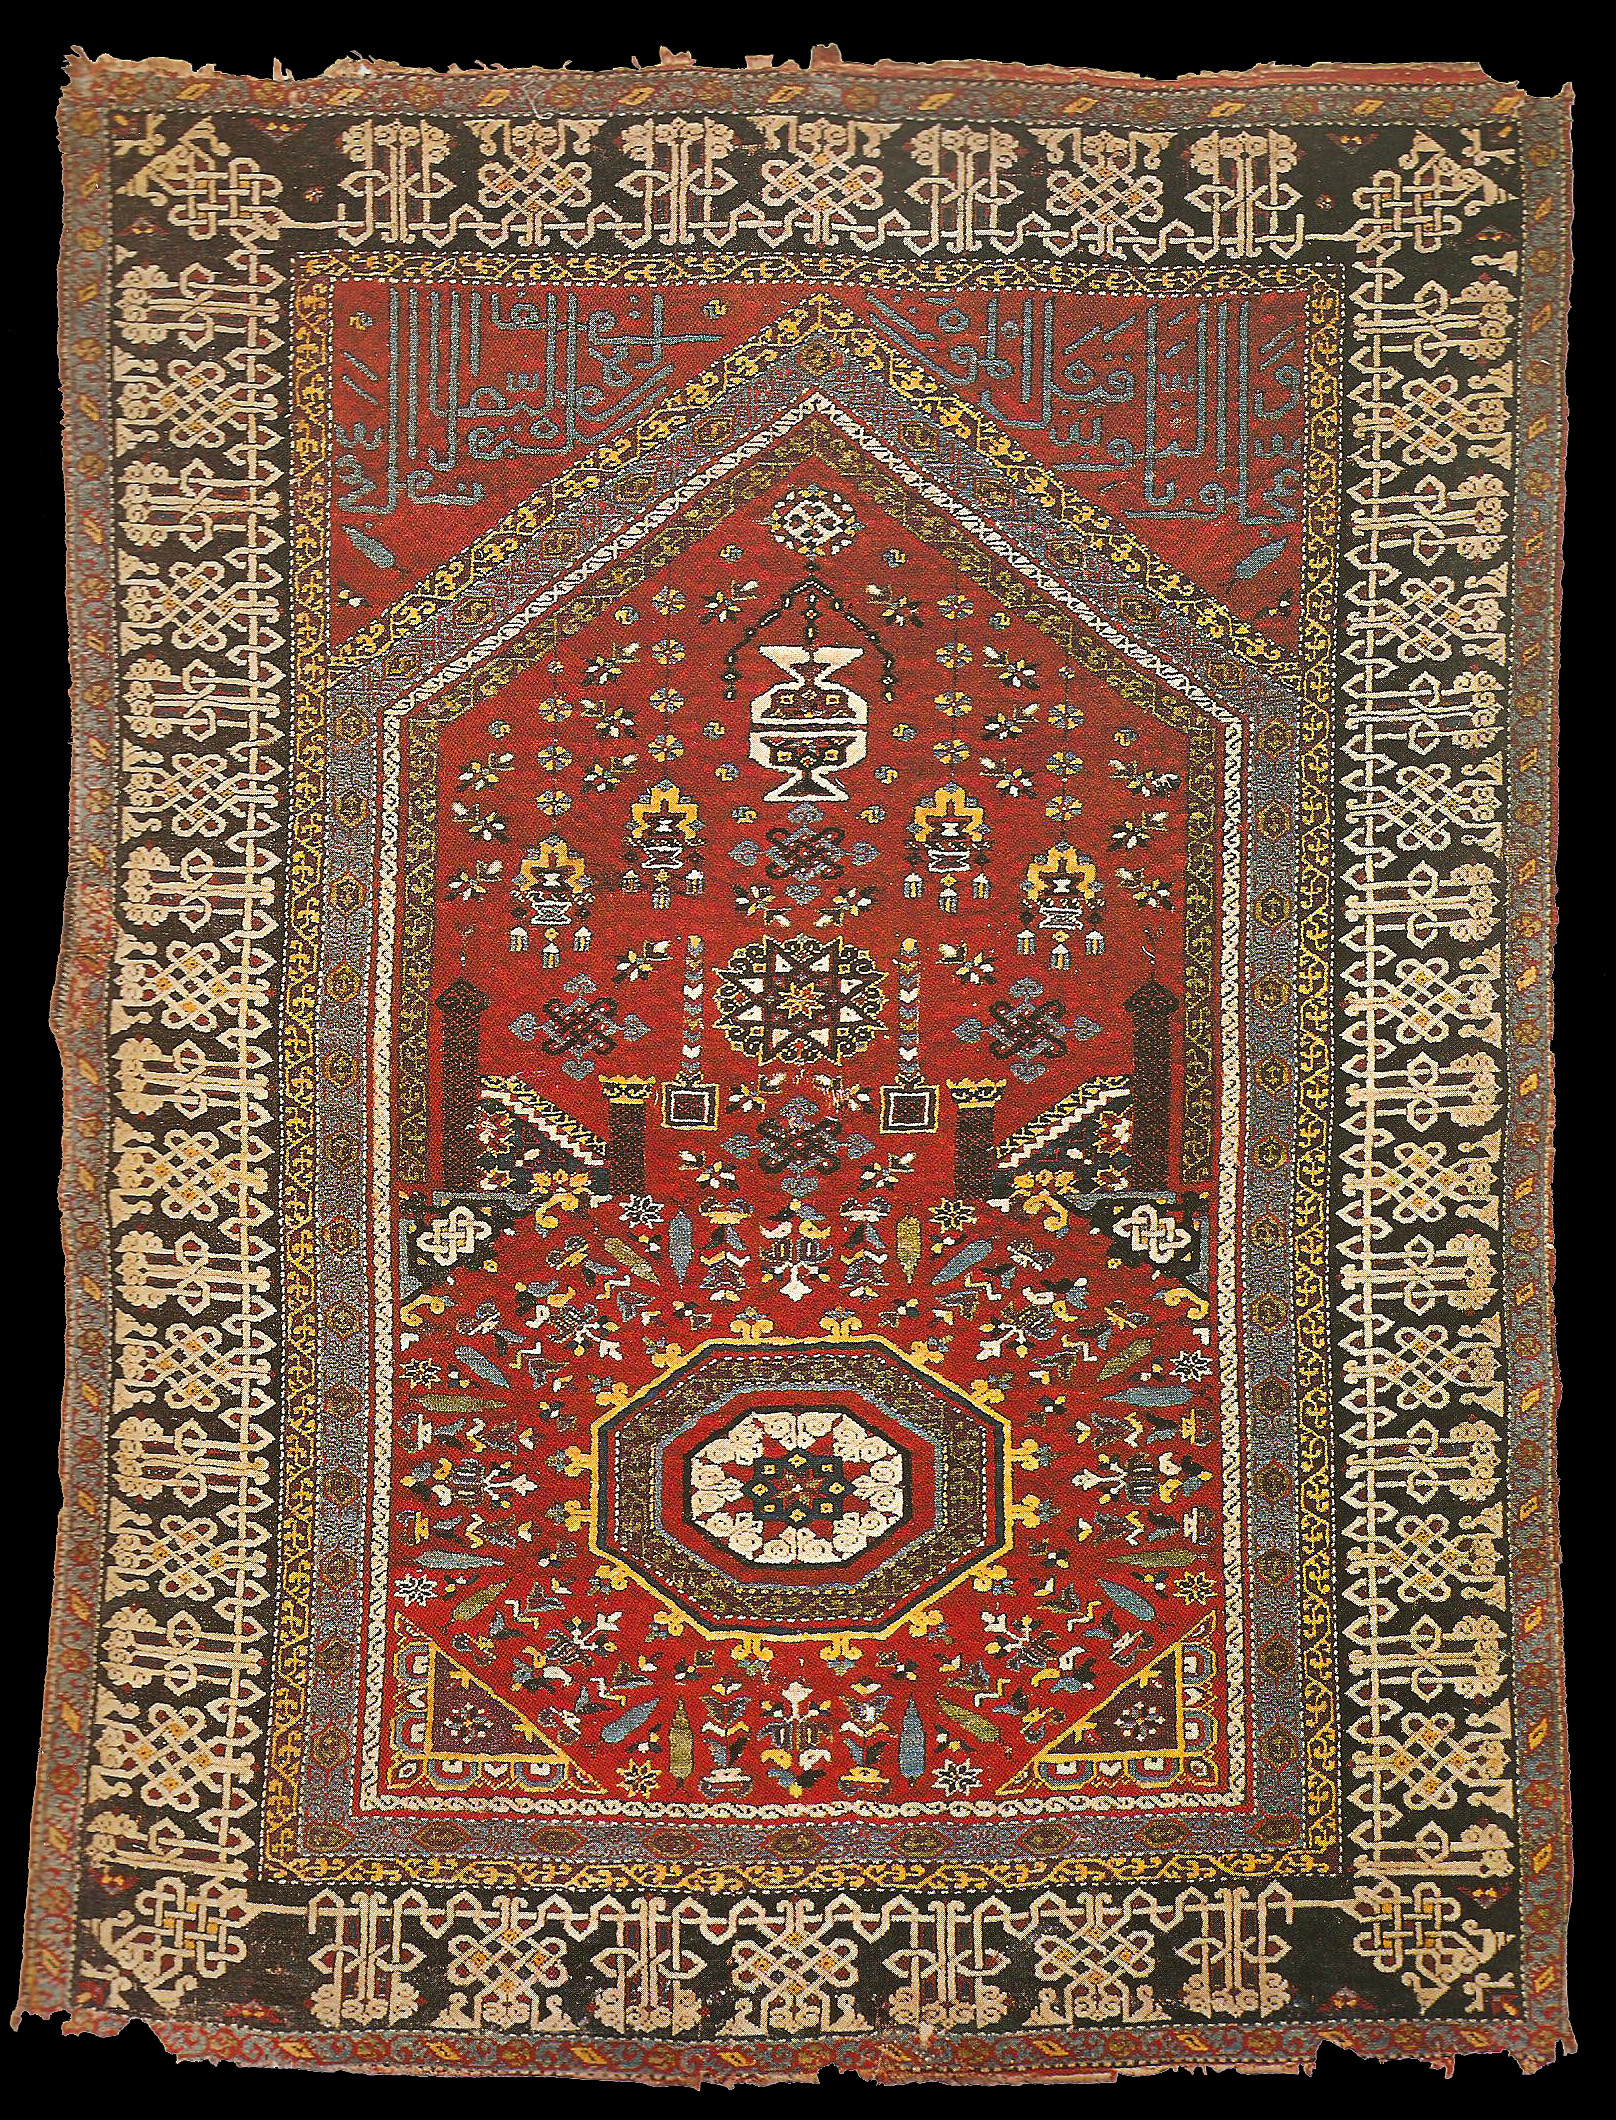 Early Western Anatolian workshop carpet, 15th century